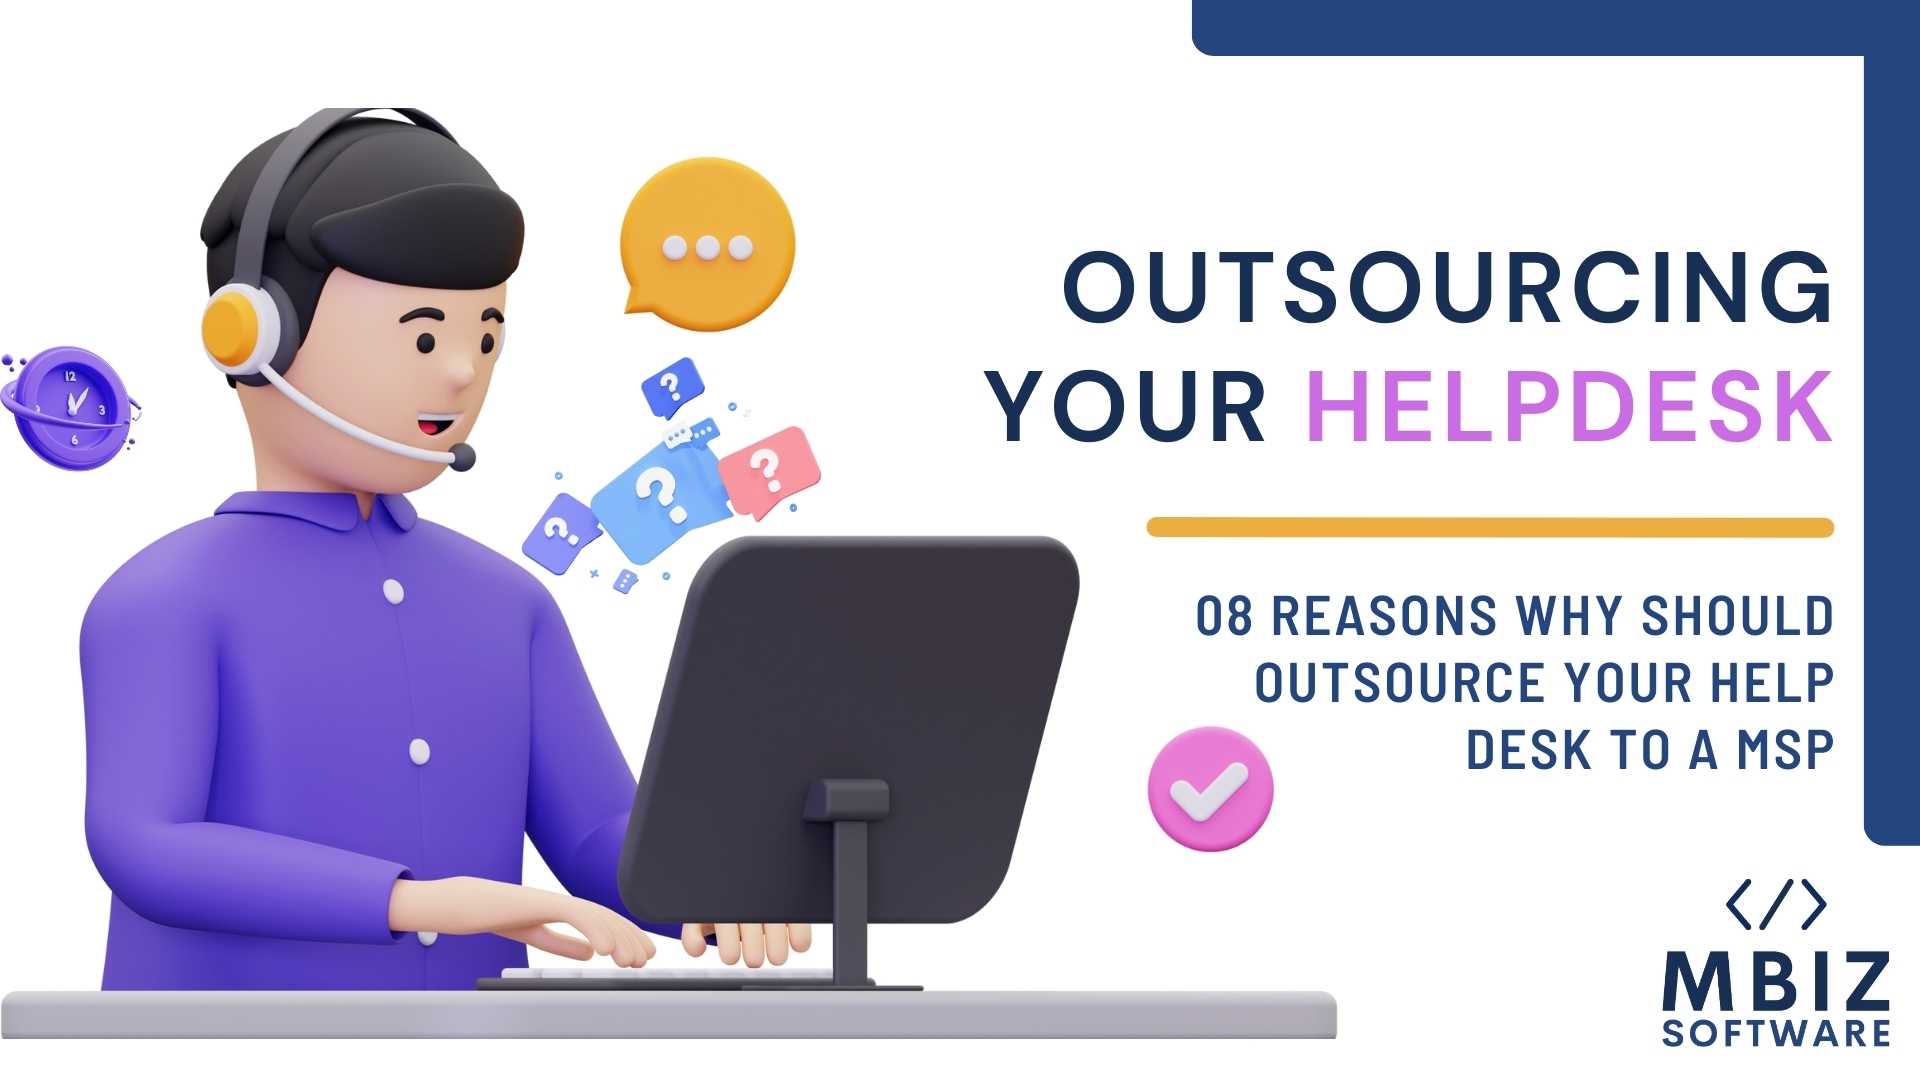 Outsorcing Help Desk MSP